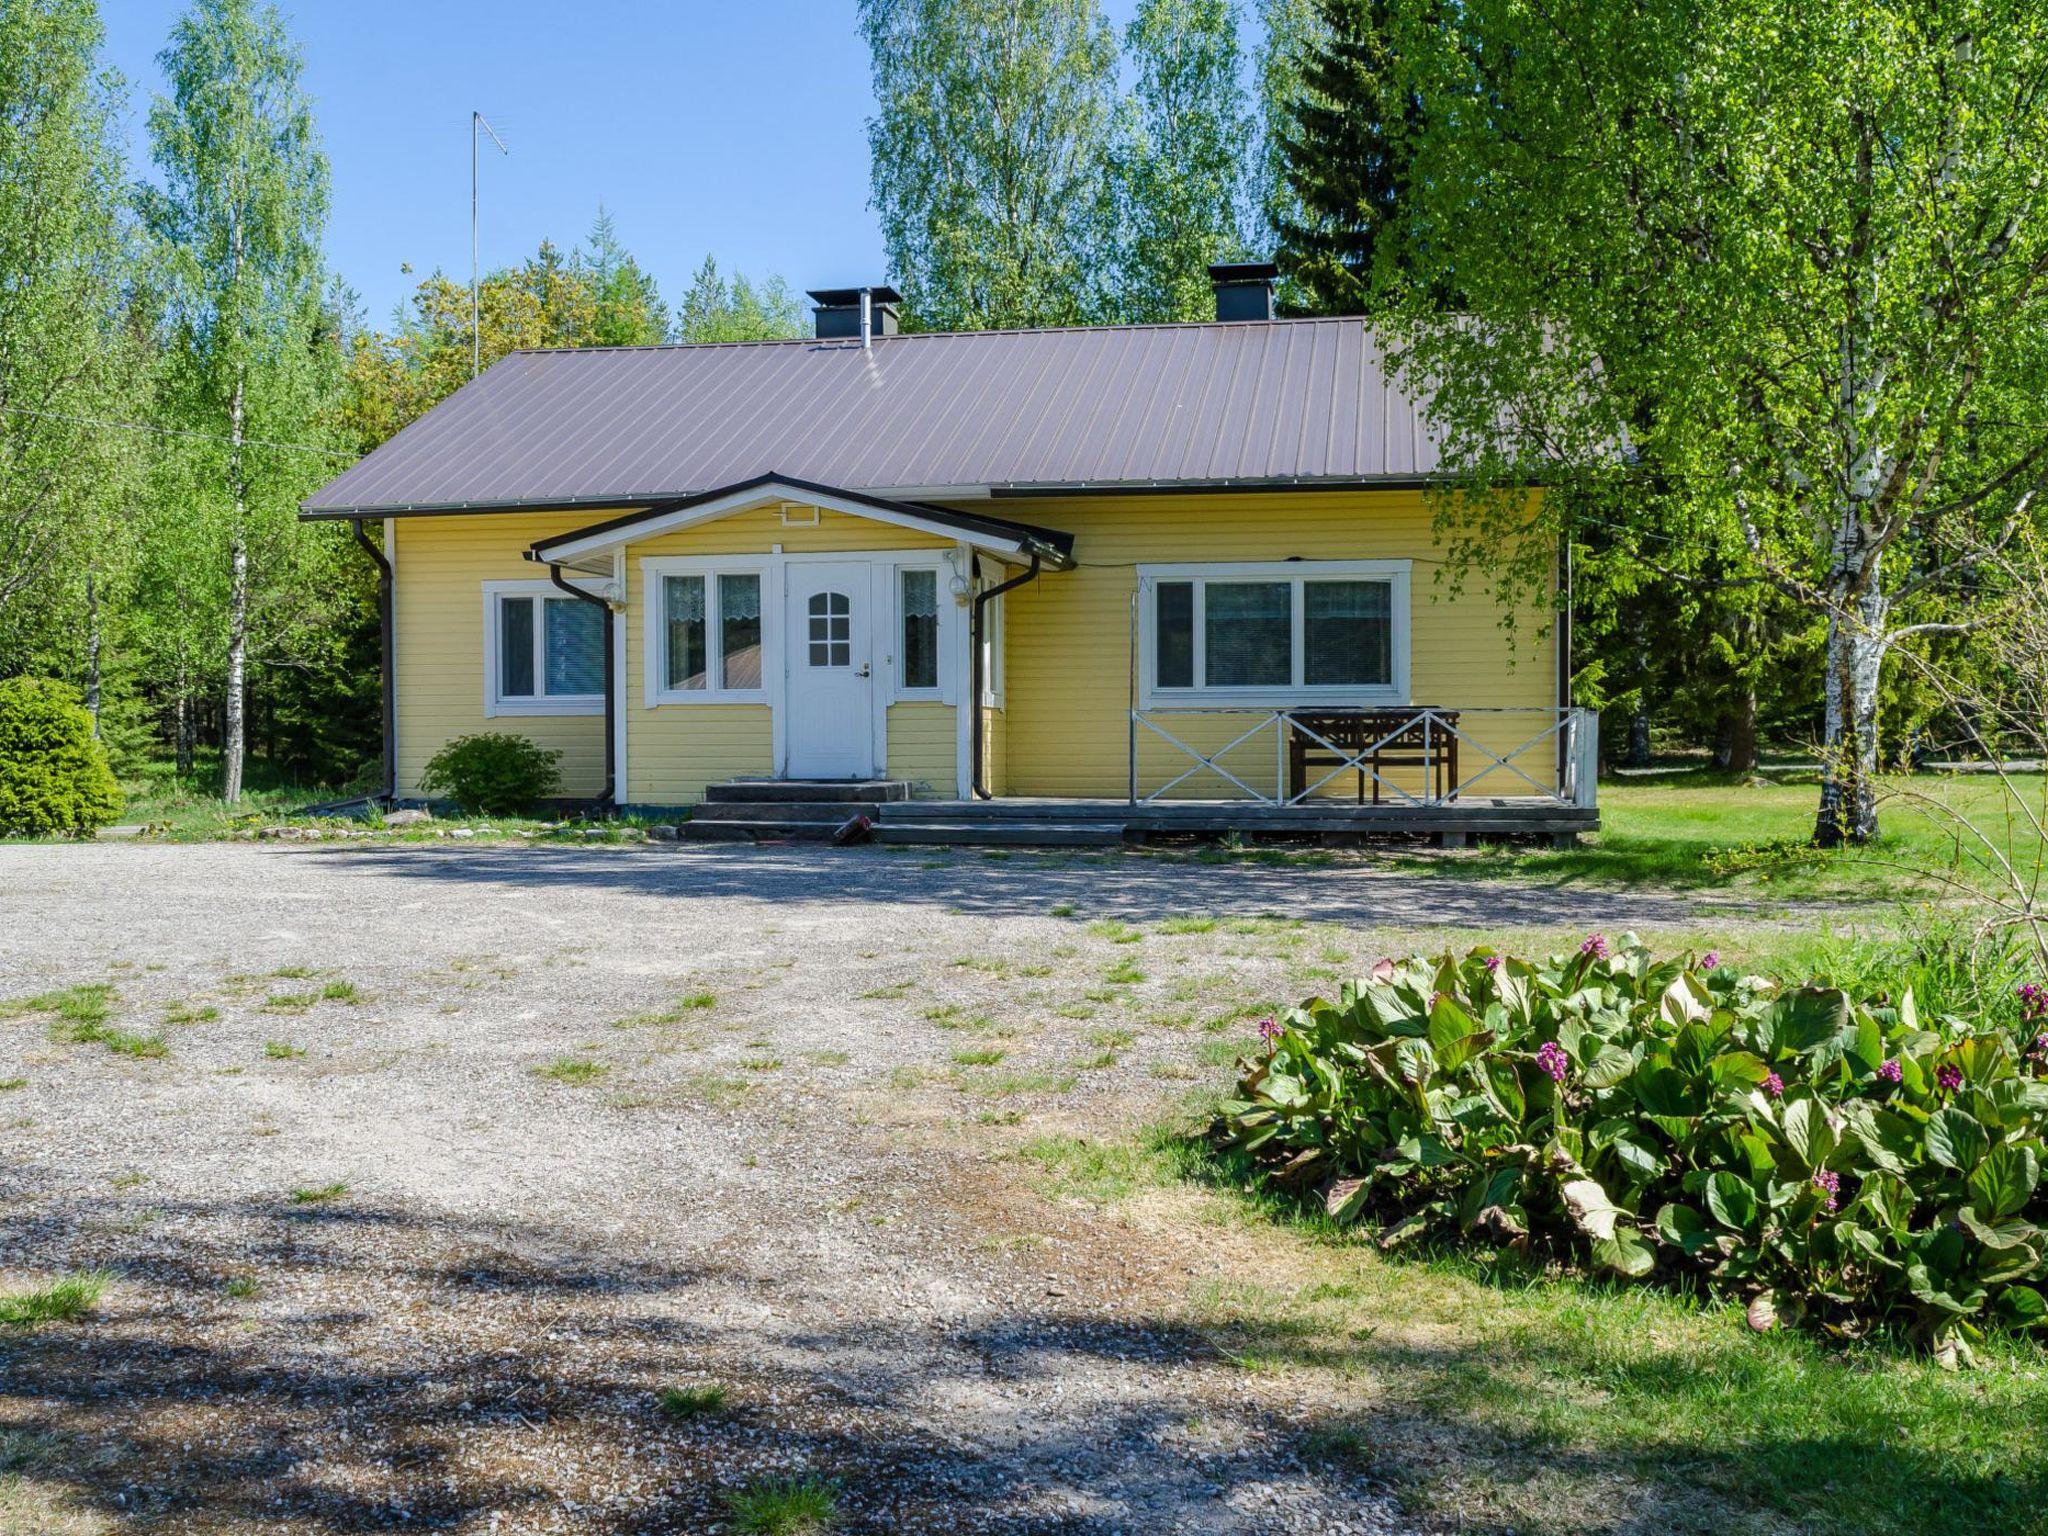 Photo 1 - 3 bedroom House in Polvijärvi with sauna